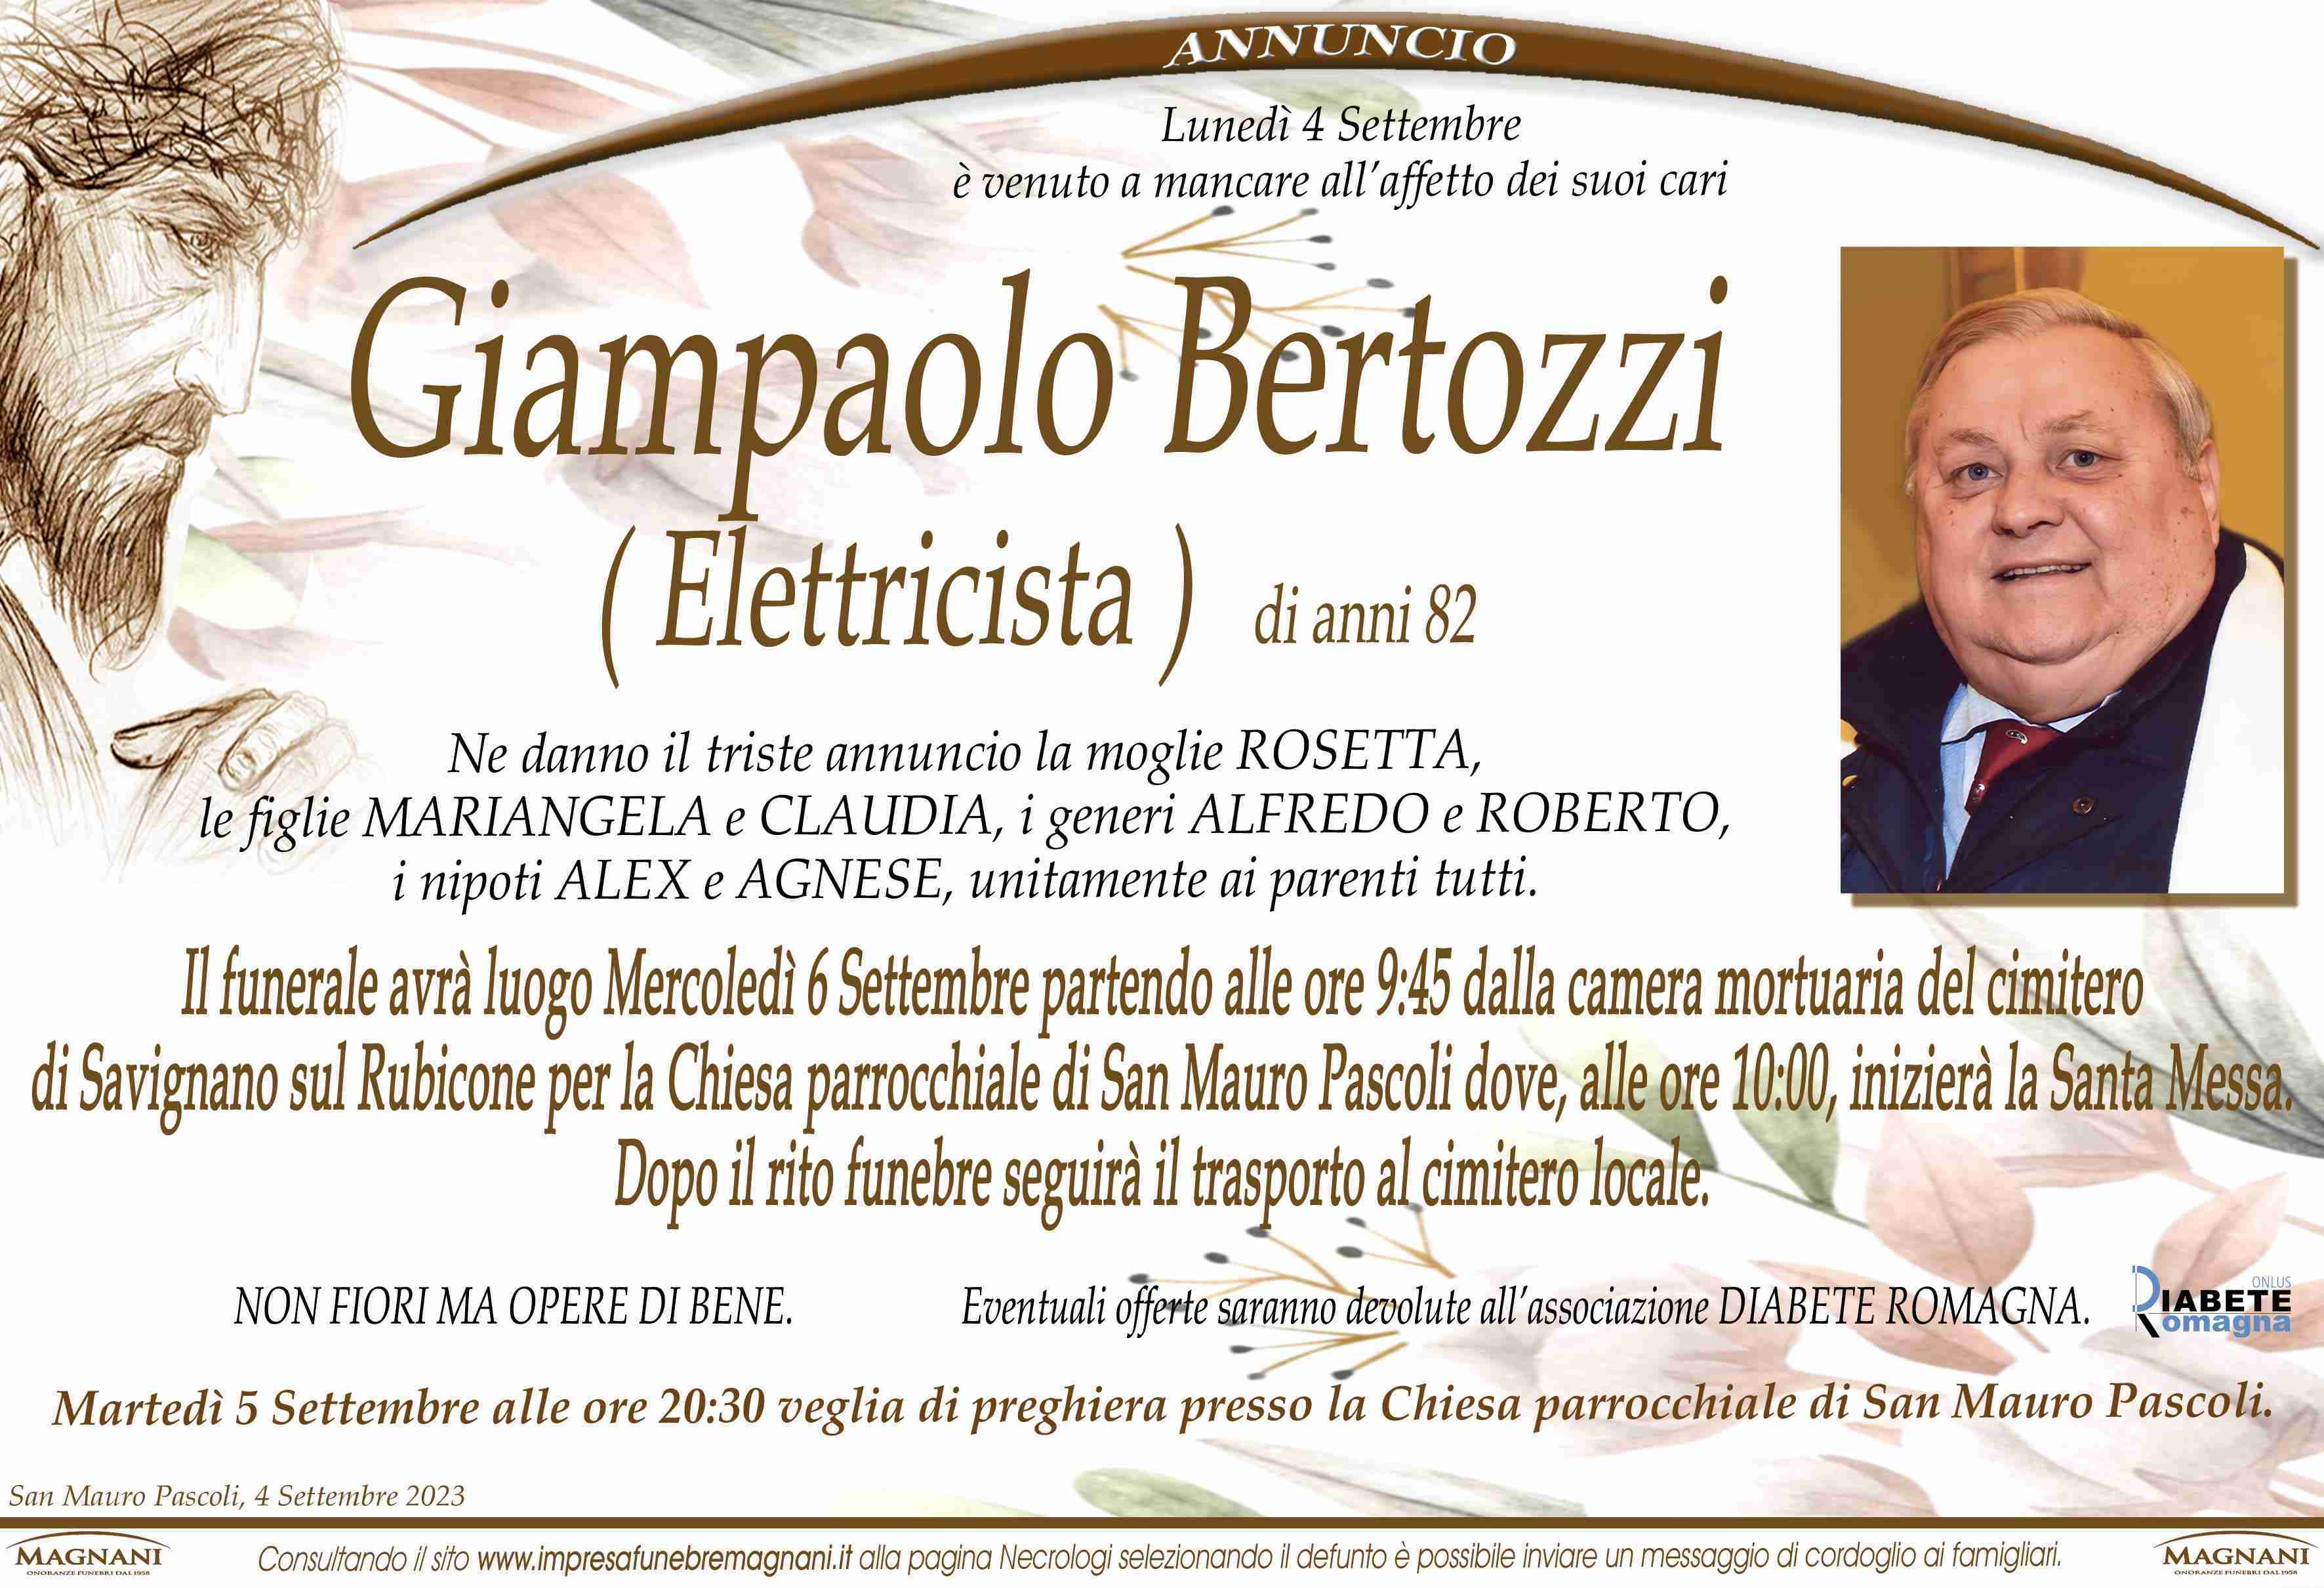 Giampaolo Bertozzi